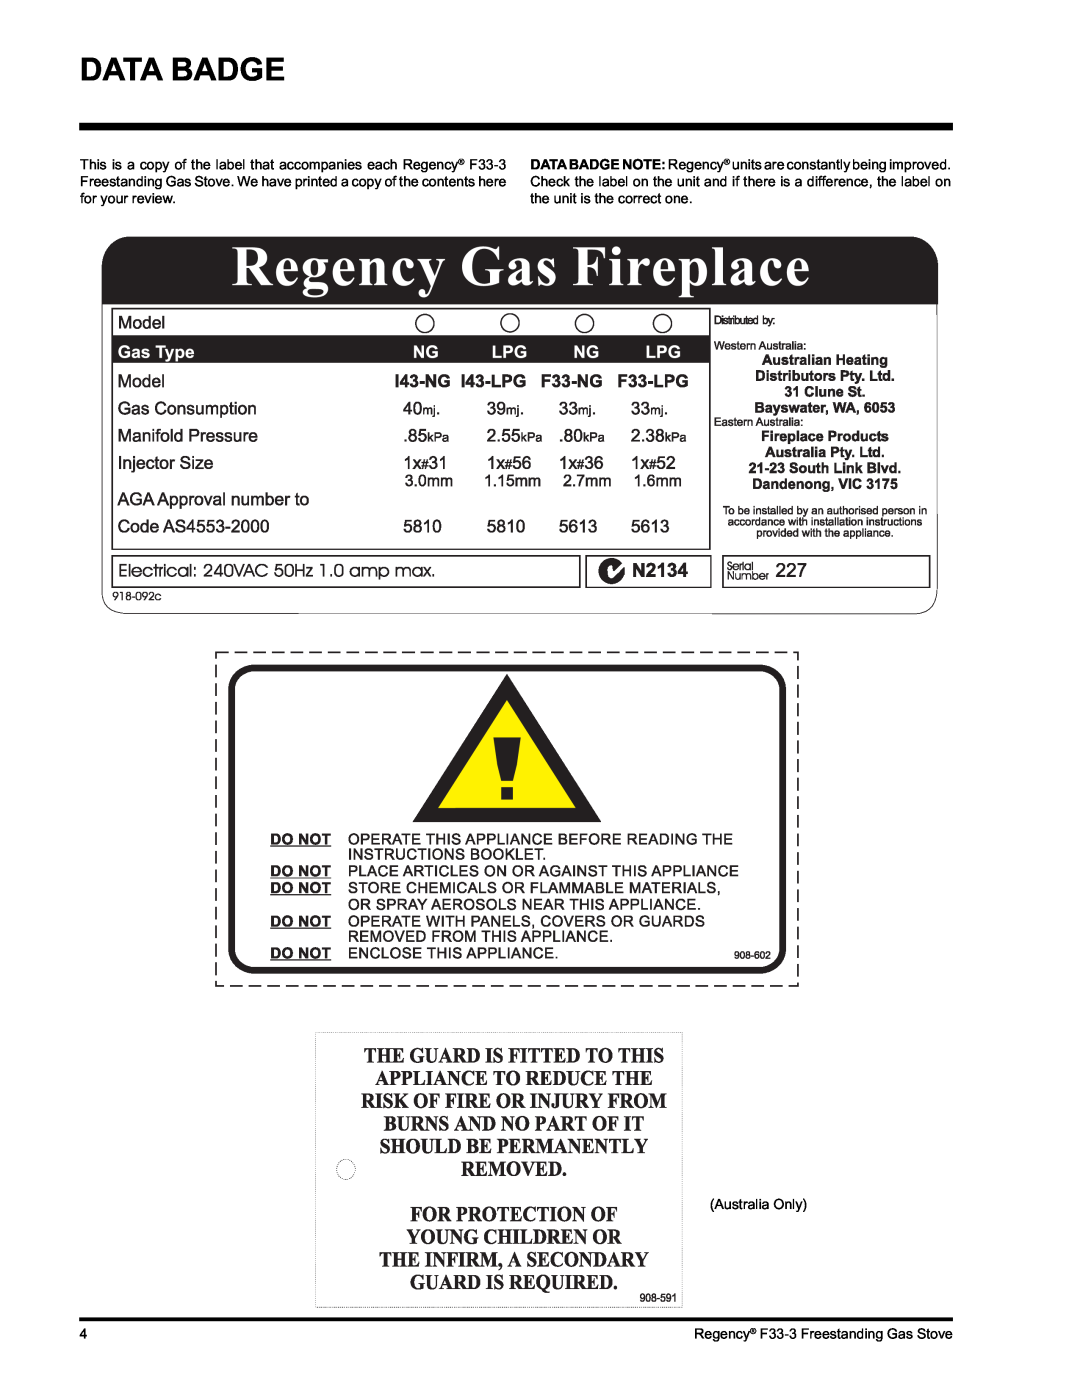 Regency Wraps installation manual Data Badge, Australia Only, Regency F33-3Freestanding Gas Stove 